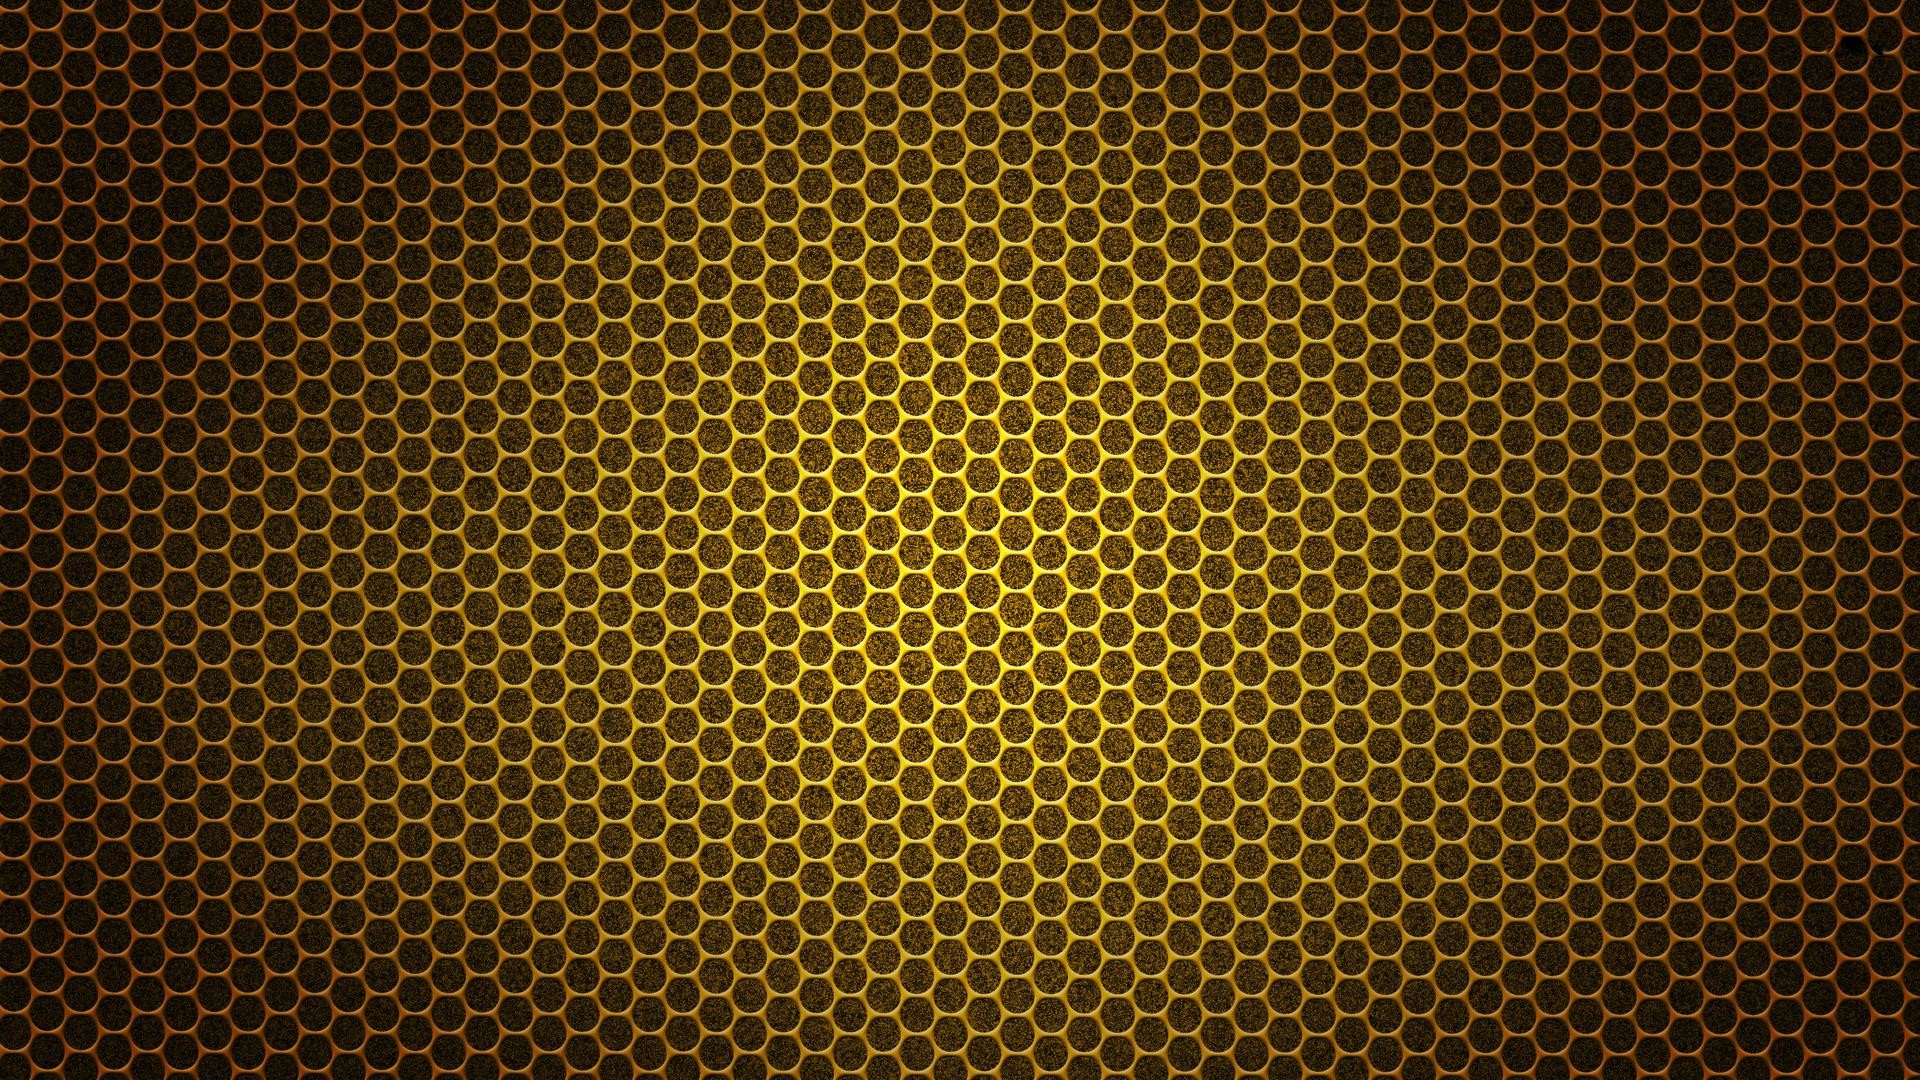 1920x1080 Gold-pattern-desktop-background-wallpapers